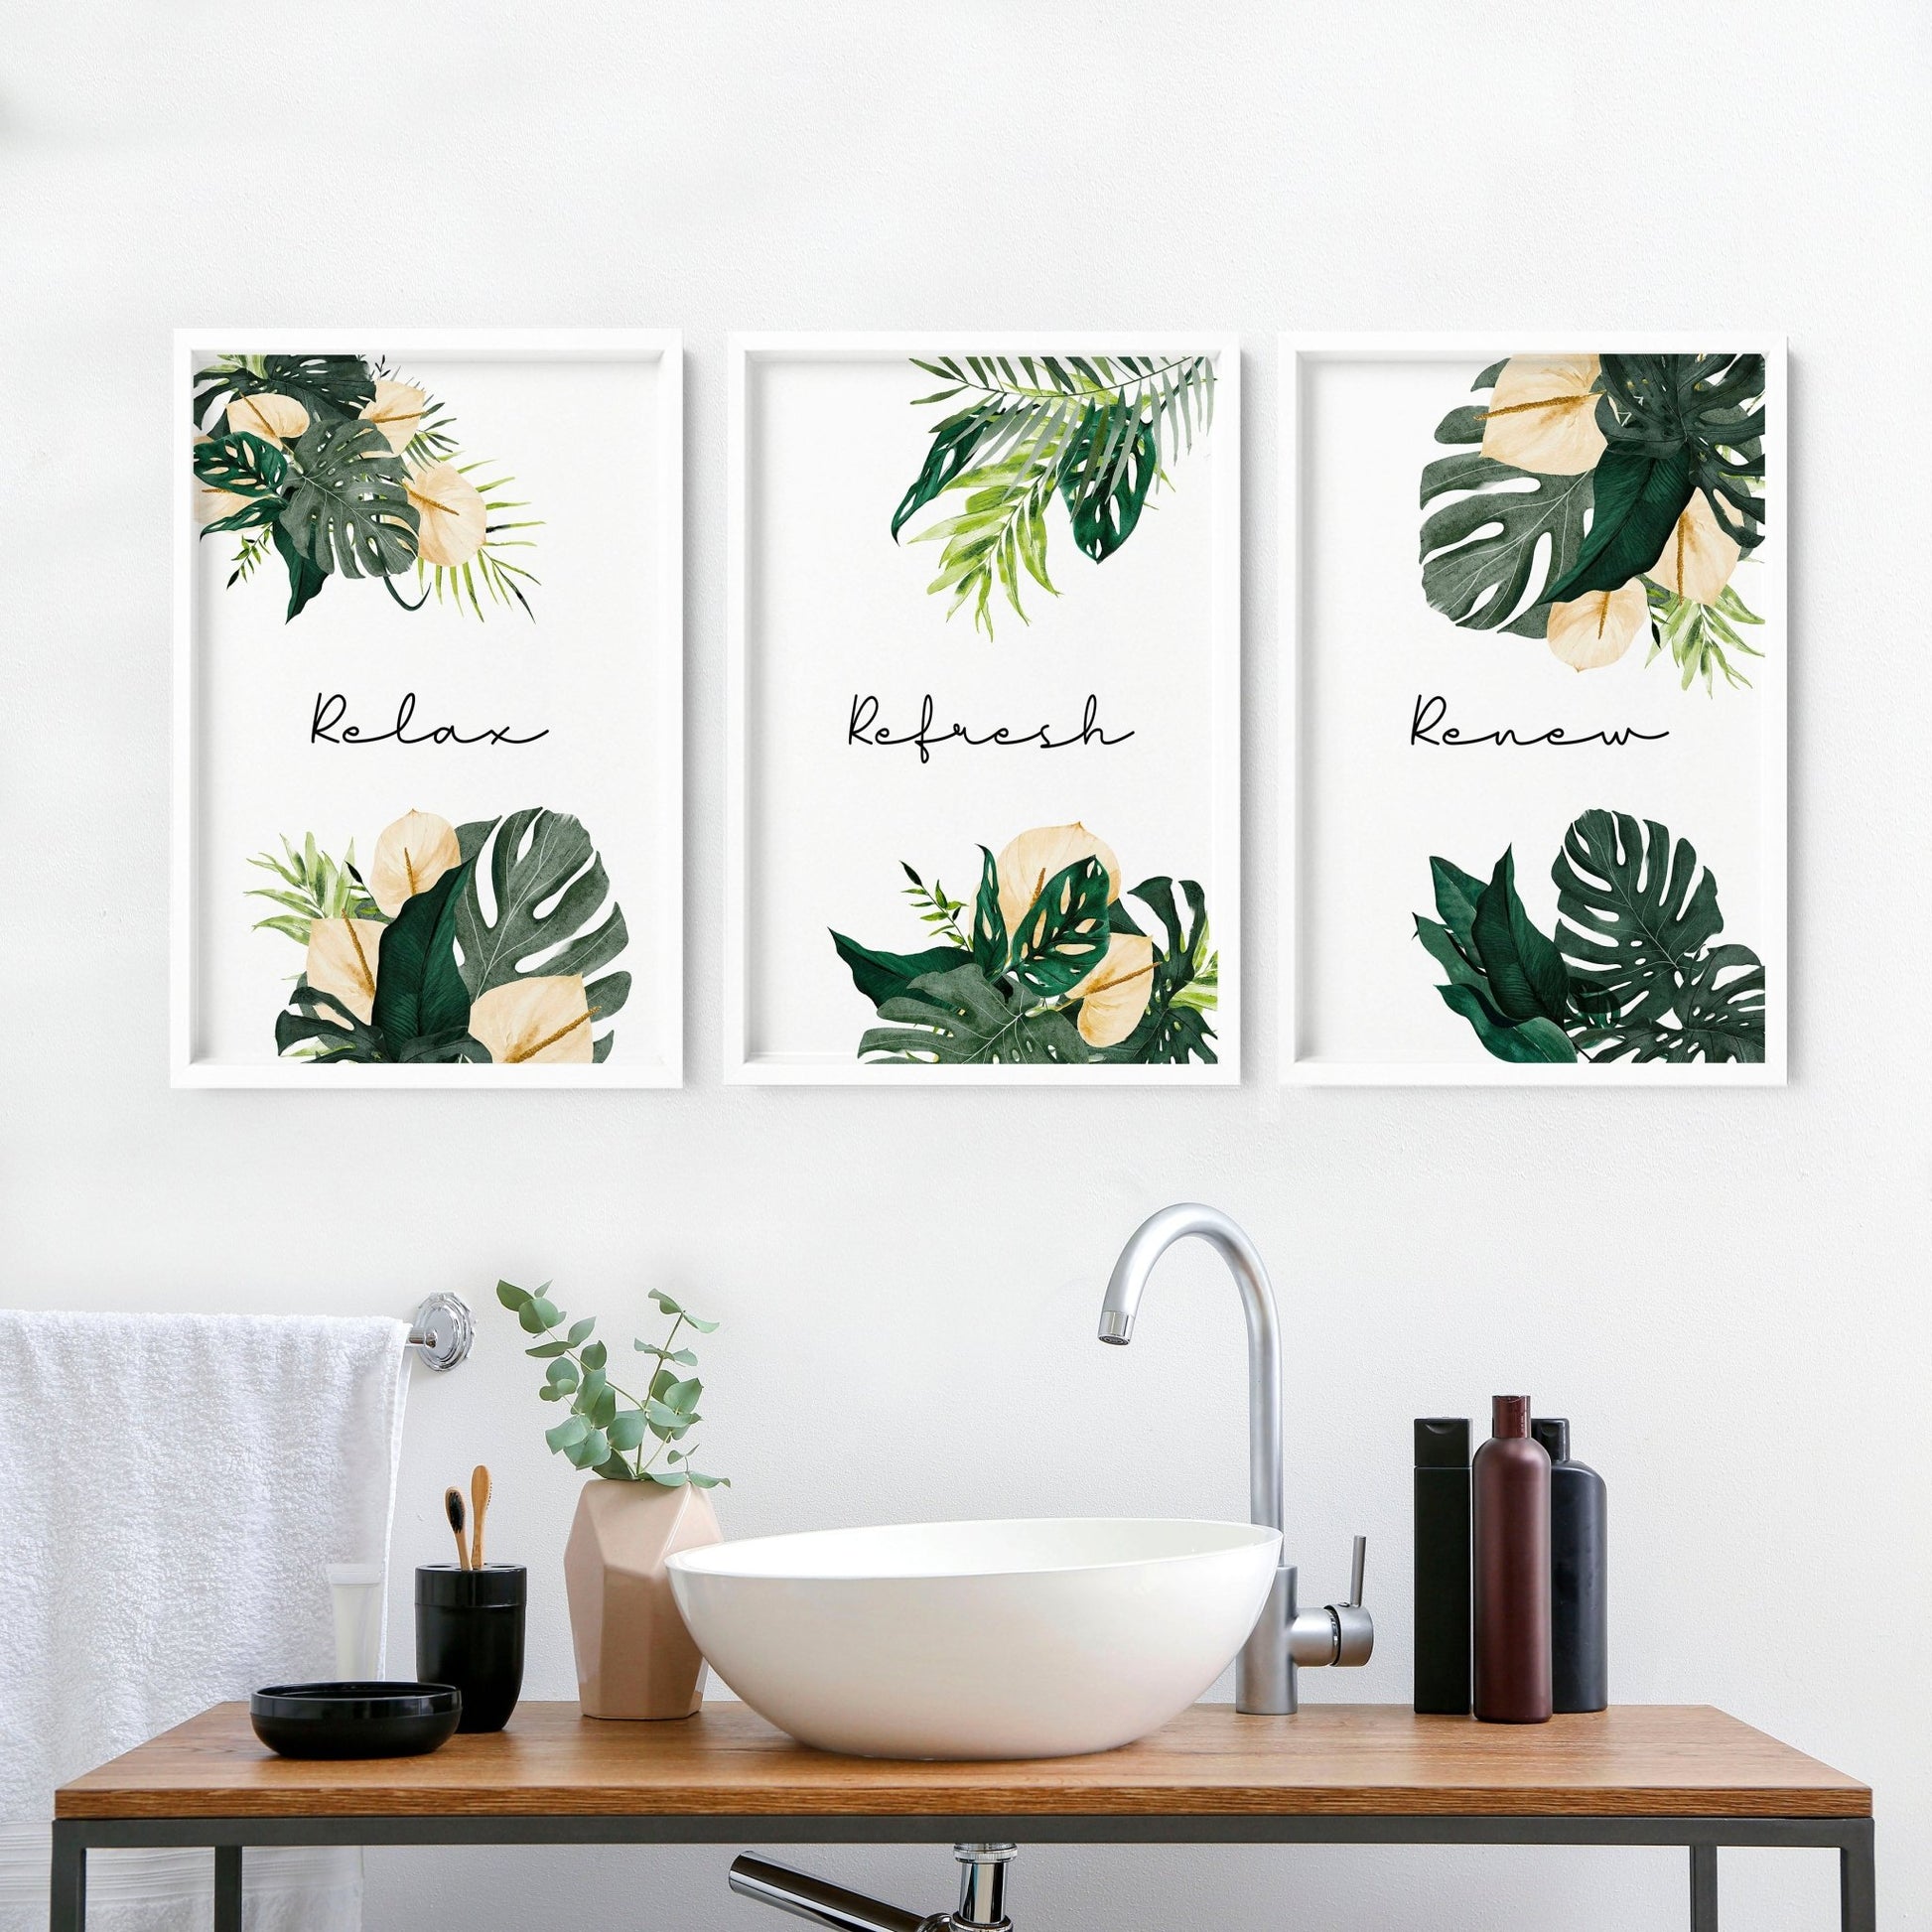 Bathroom decor art | set of 3 wall art prints - About Wall Art